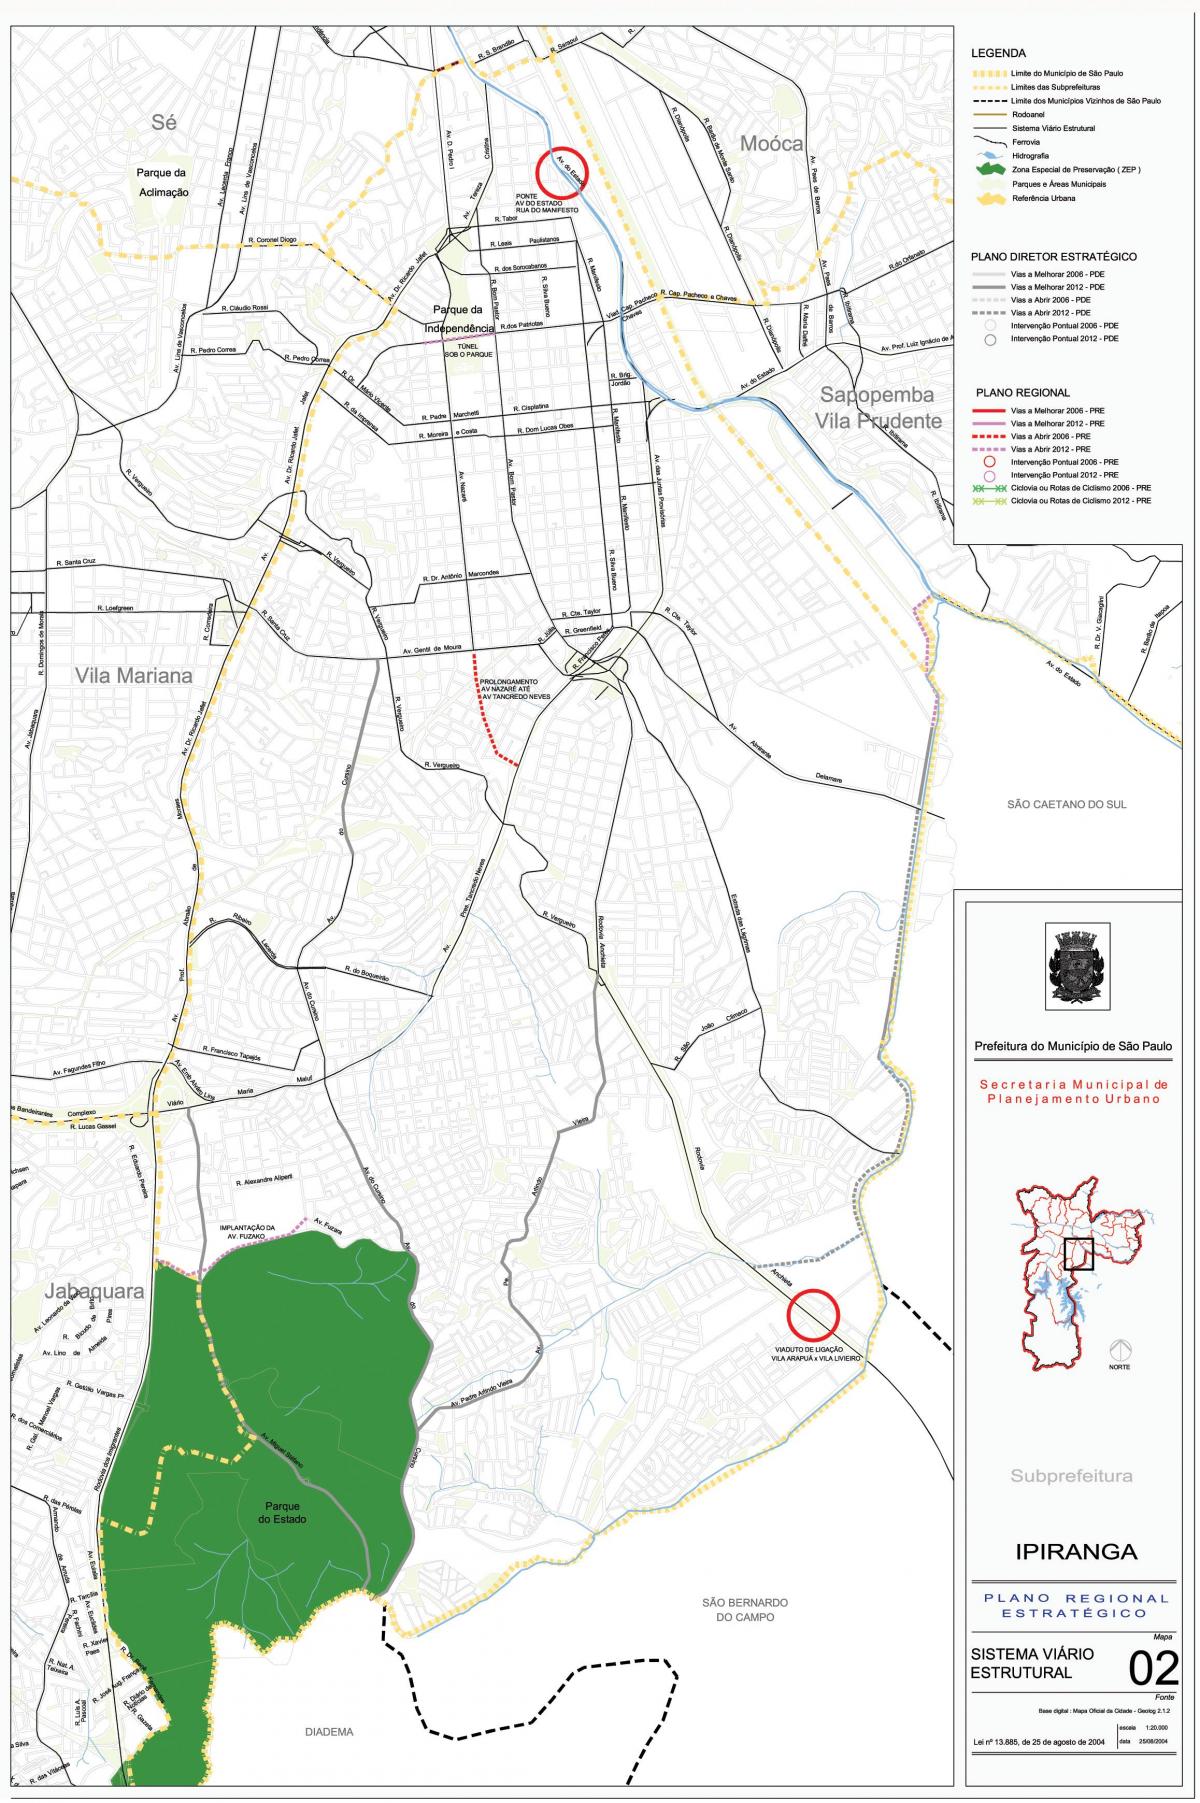 Mapa de Ipiranga São Paulo - Carreteres